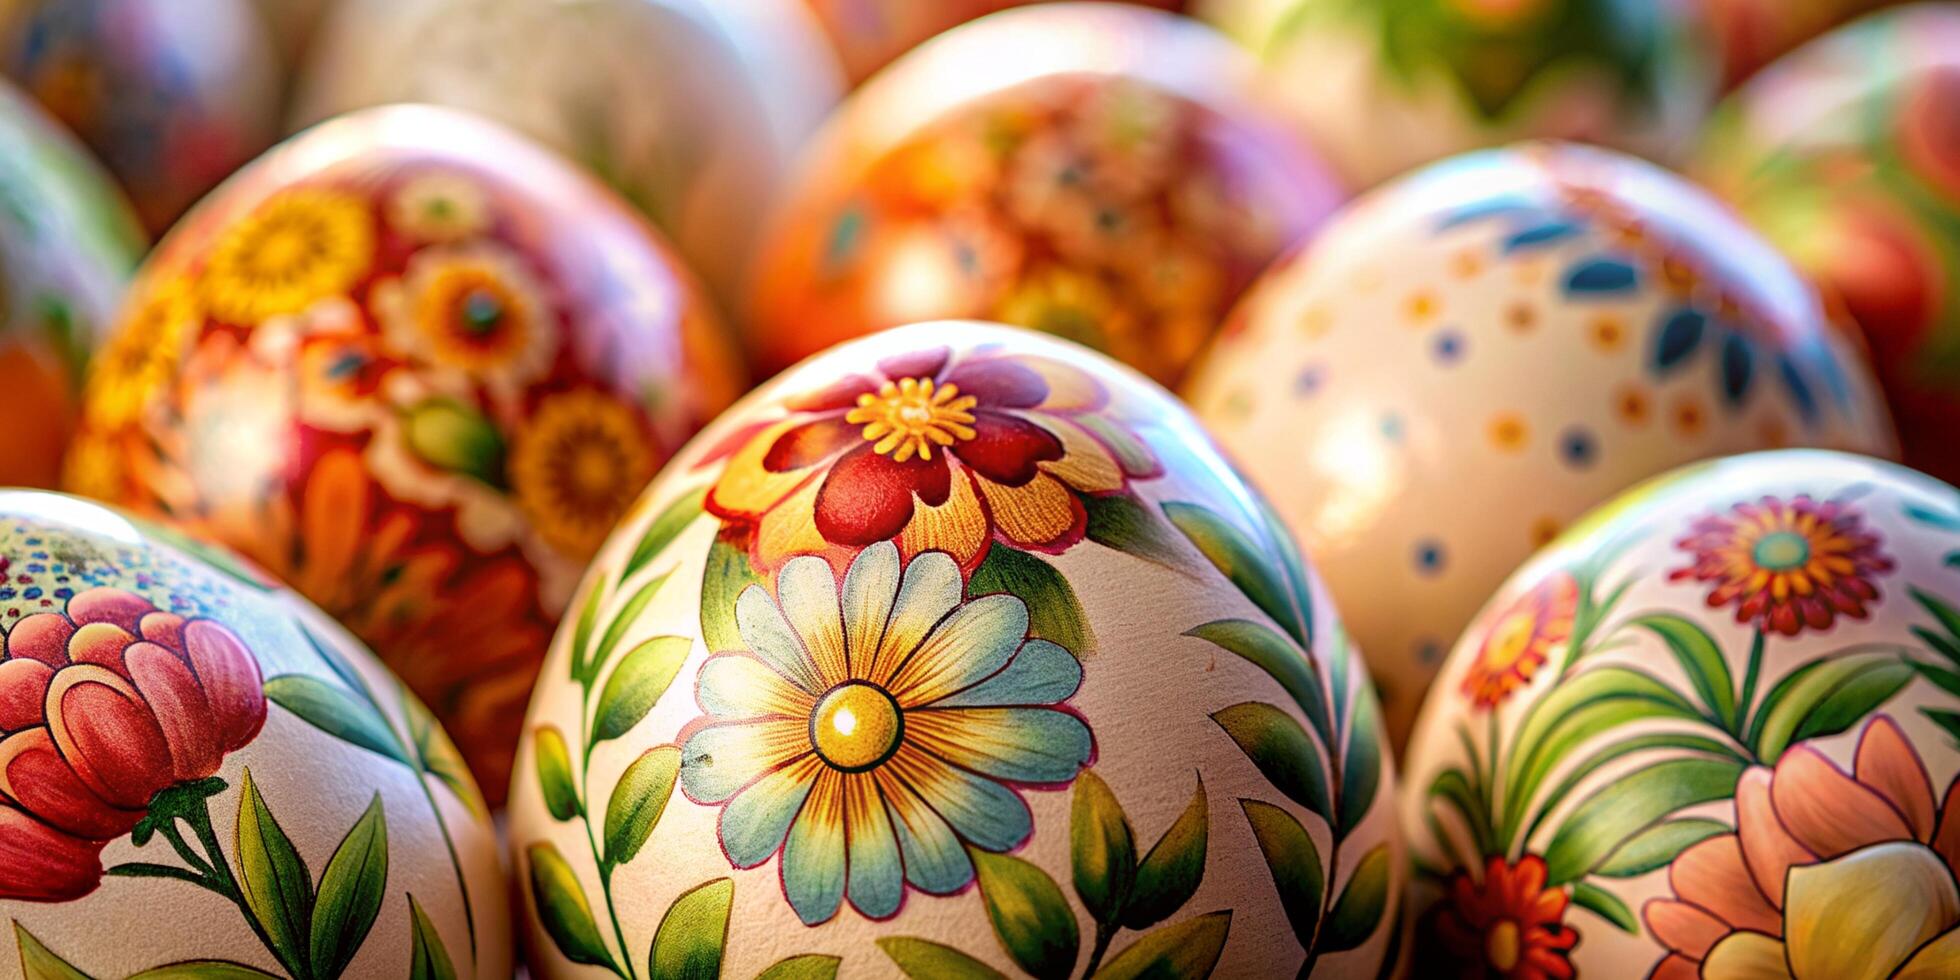 de cerca mucho de hermosamente pintado Pascua de Resurrección huevos, hermosa floral modelo Pascua de Resurrección huevos foto